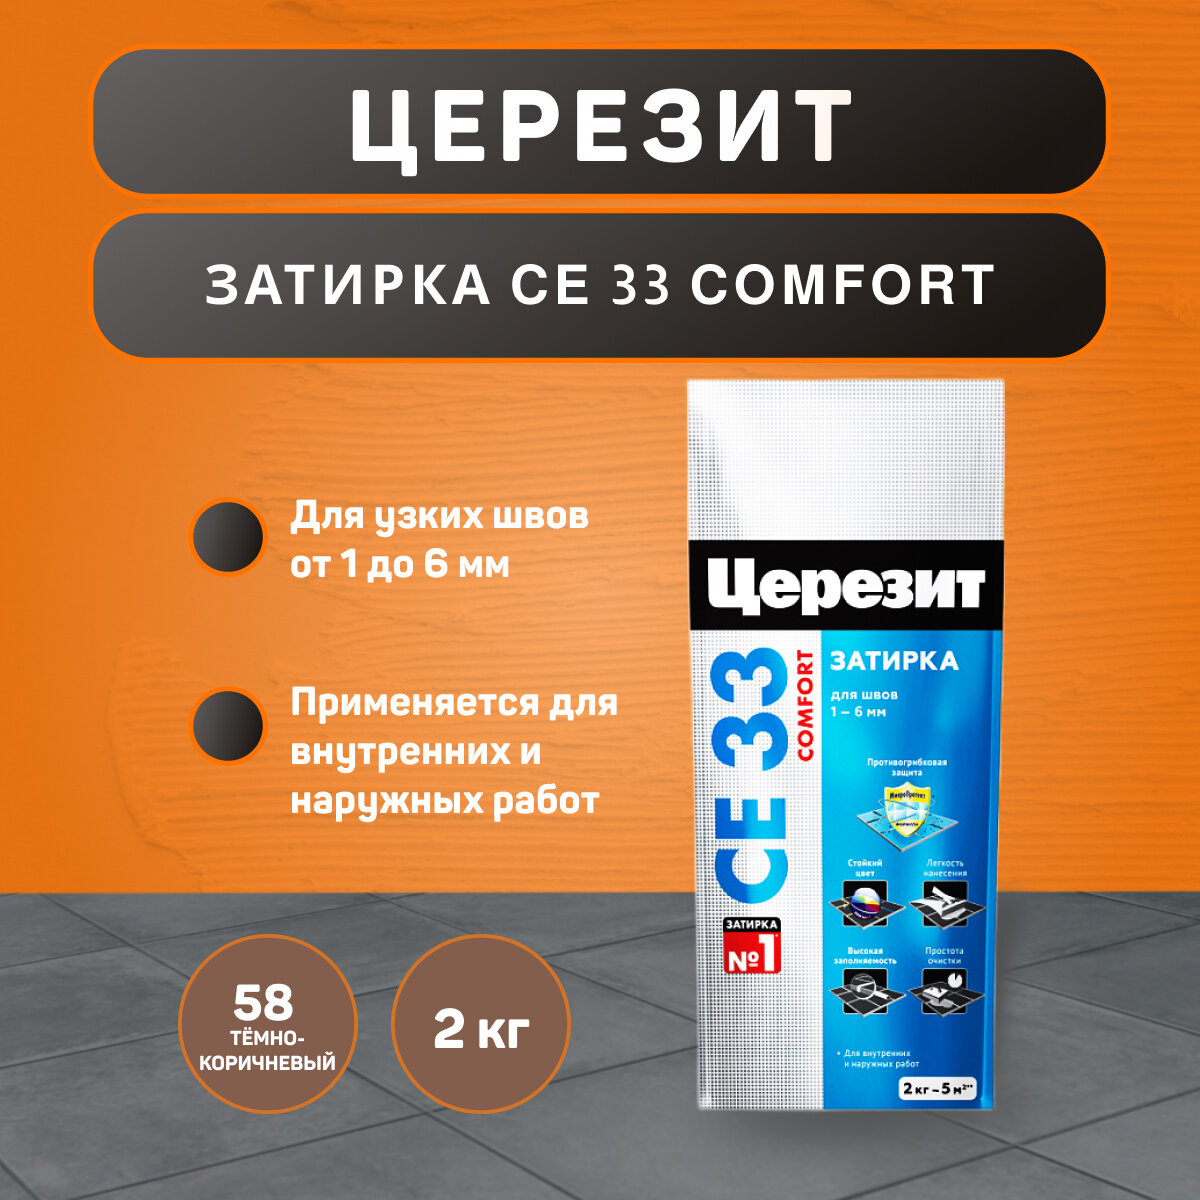 Затирка Ceresit CE 33 Comfort №58 темно-коричневая 2 кг